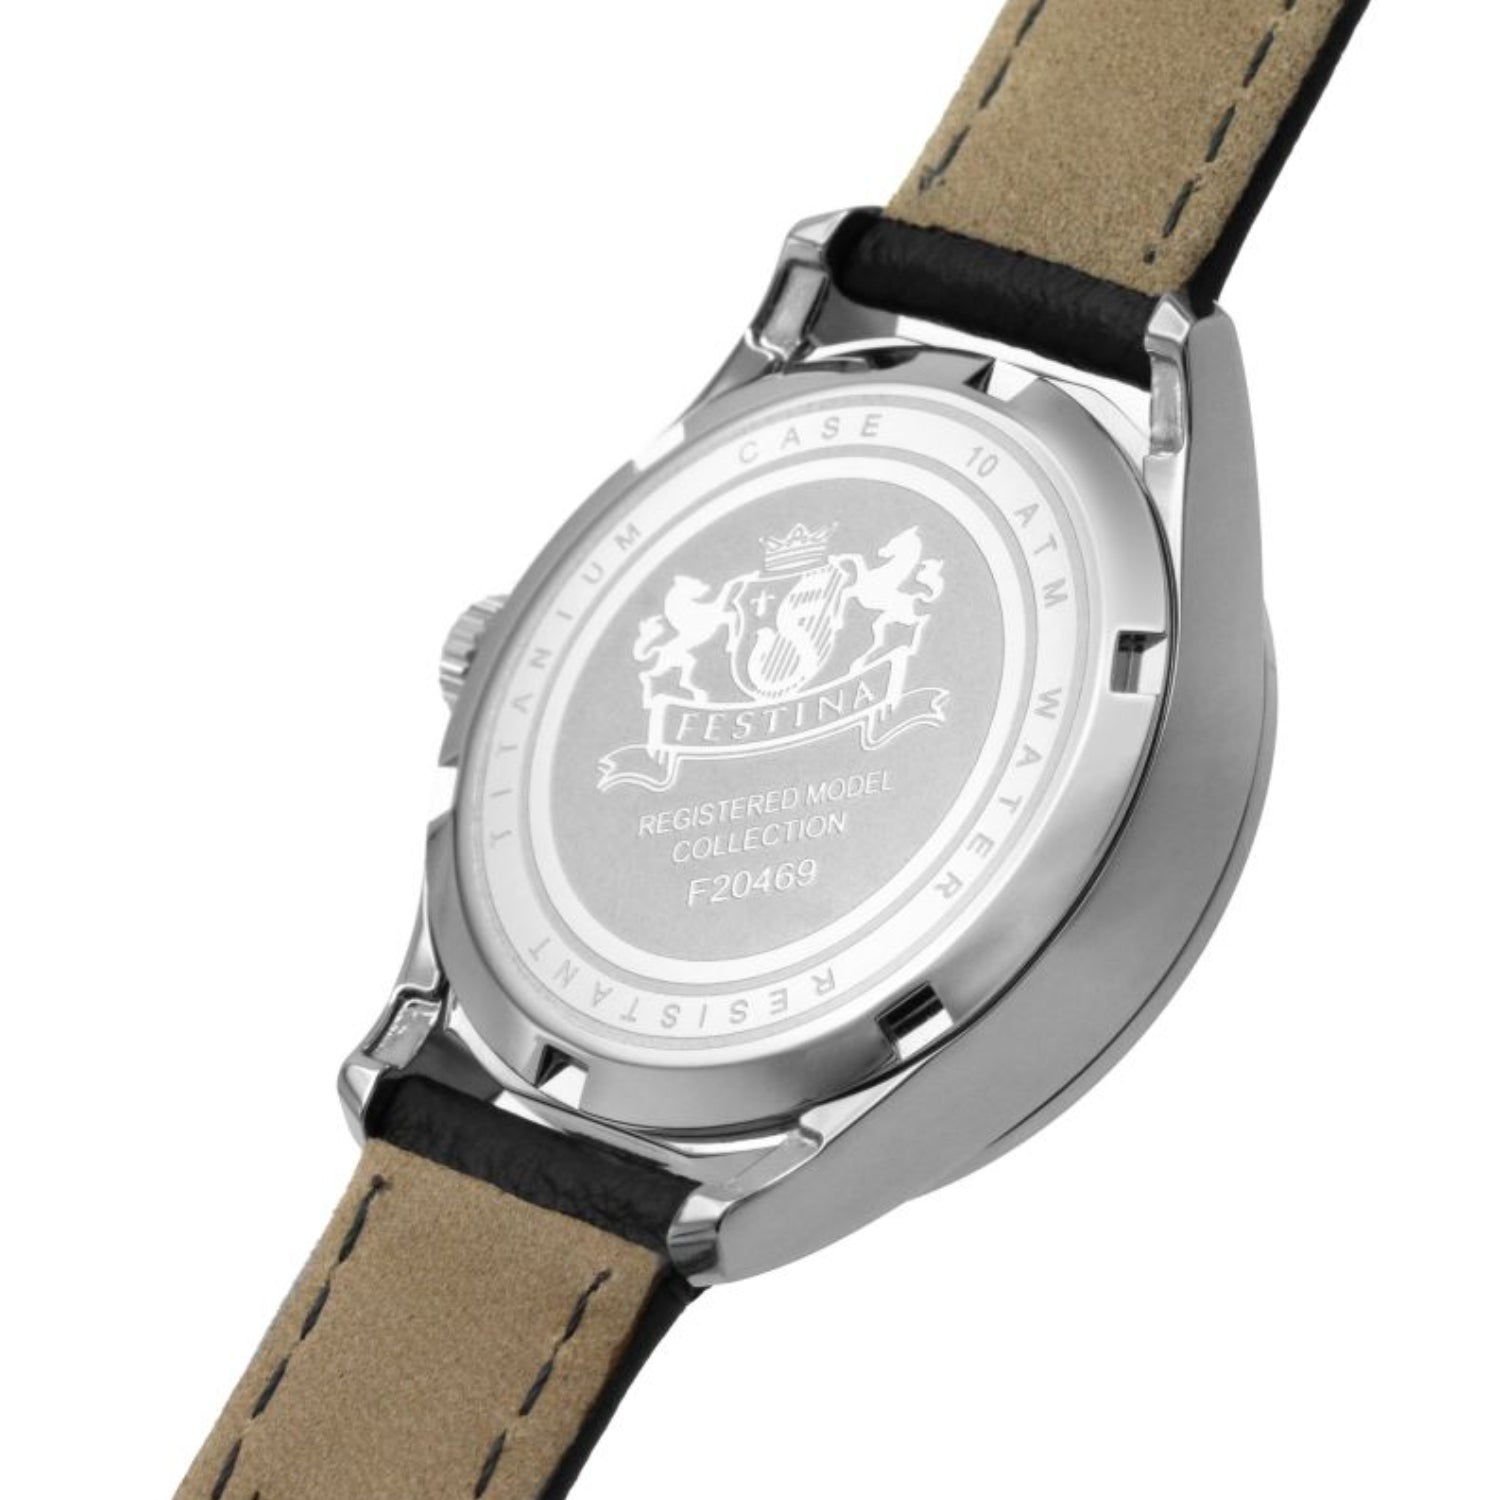 Festina women's white dial quartz watch - f20469/1